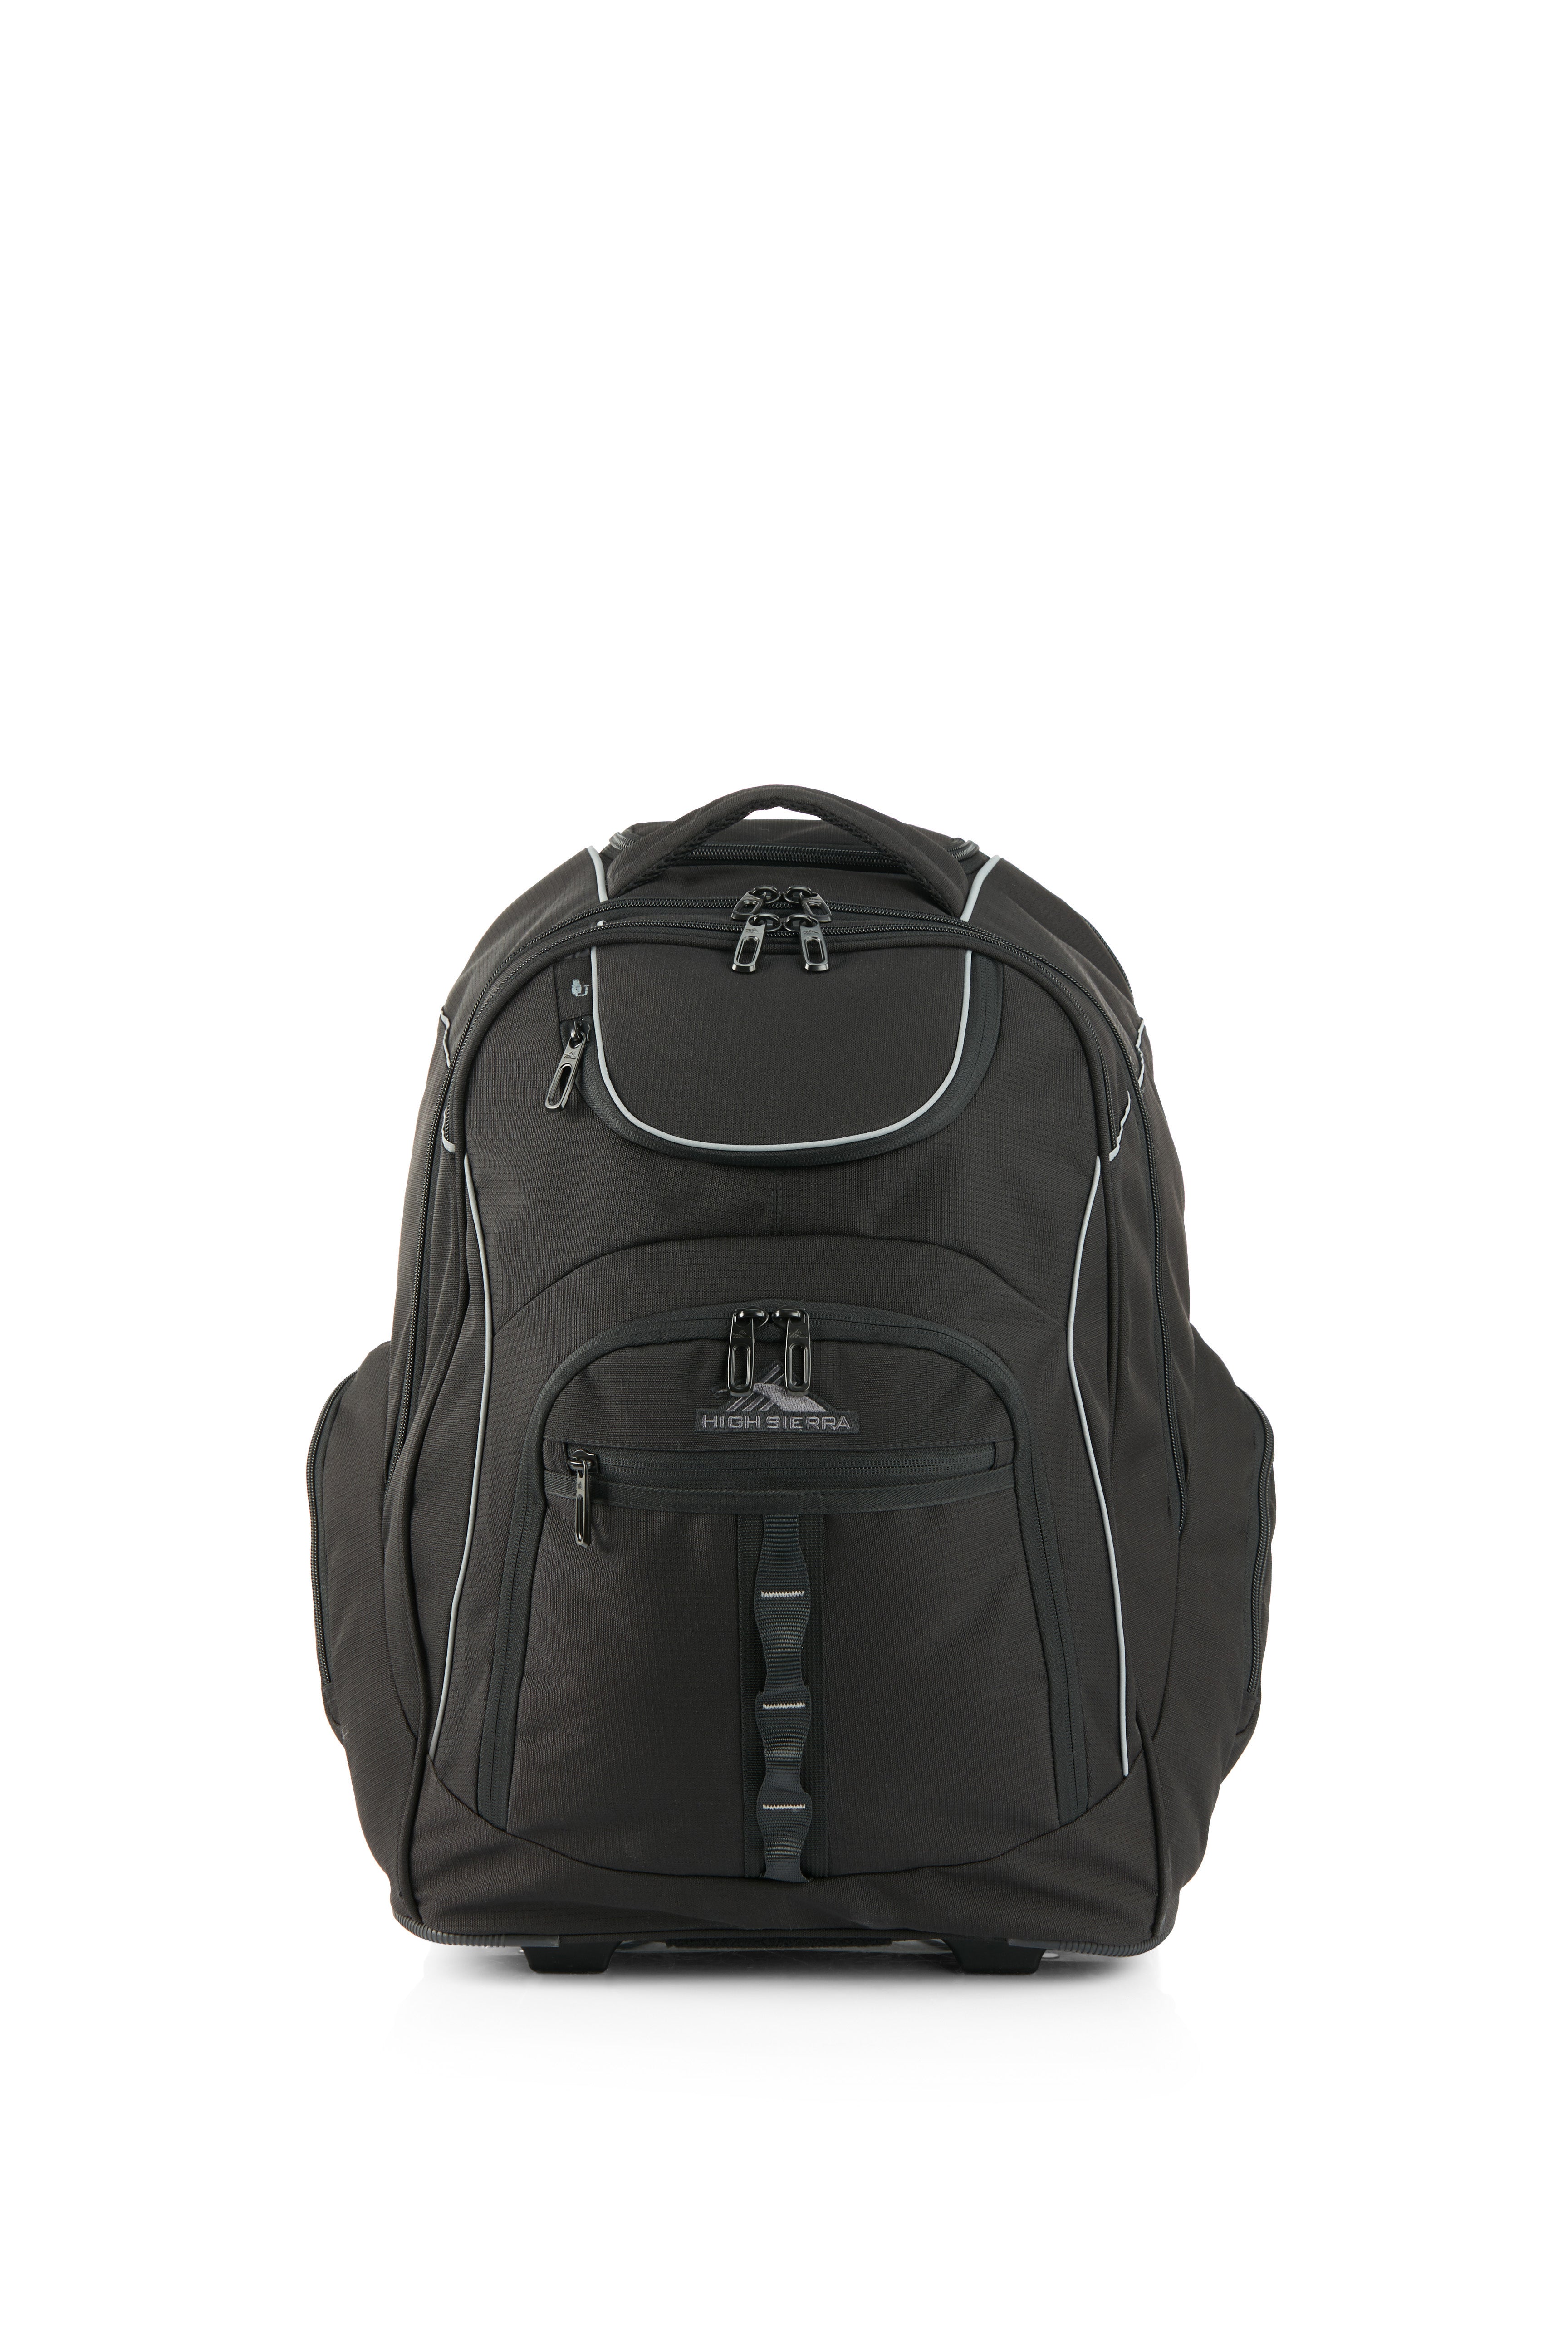 High Sierra - Access 3.0 Eco Pro Wheeled backpack - Black-1